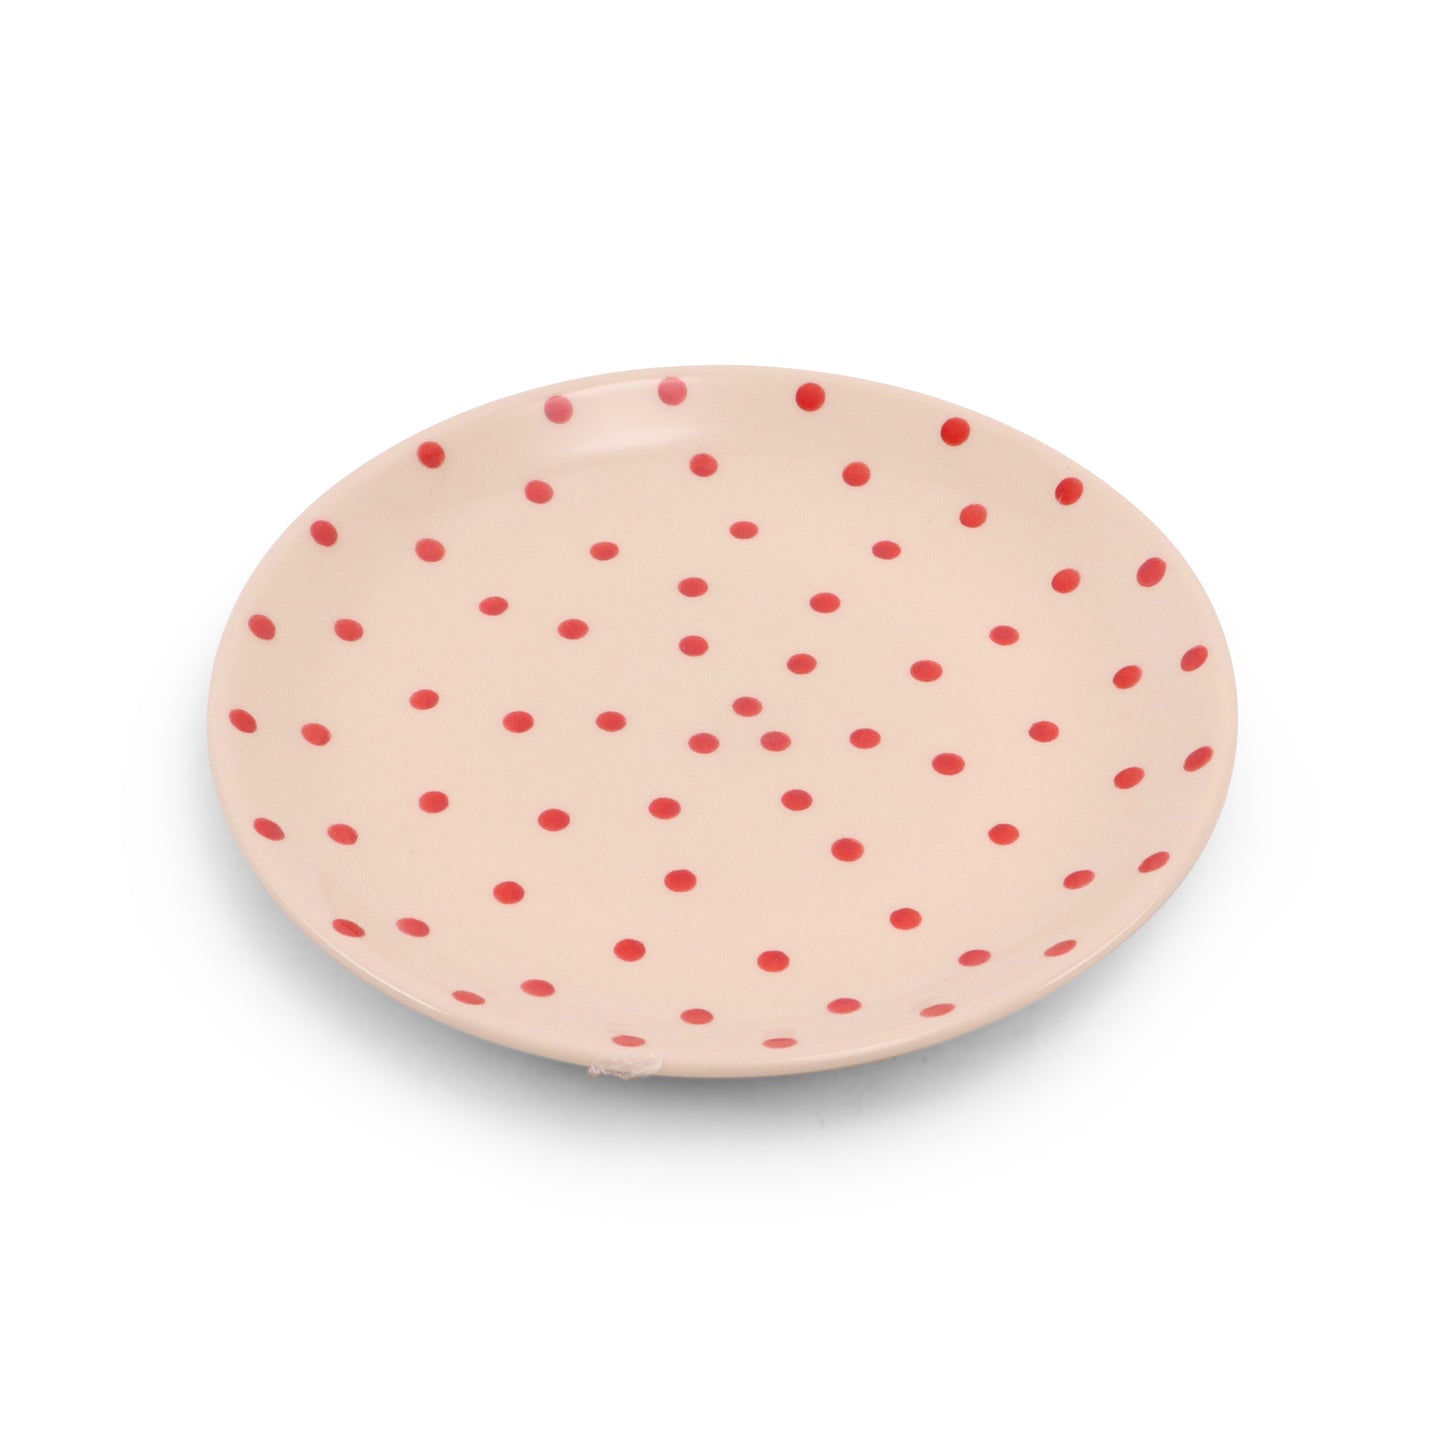 7.5" Dessert Plate Pattern: Red Polka Dot